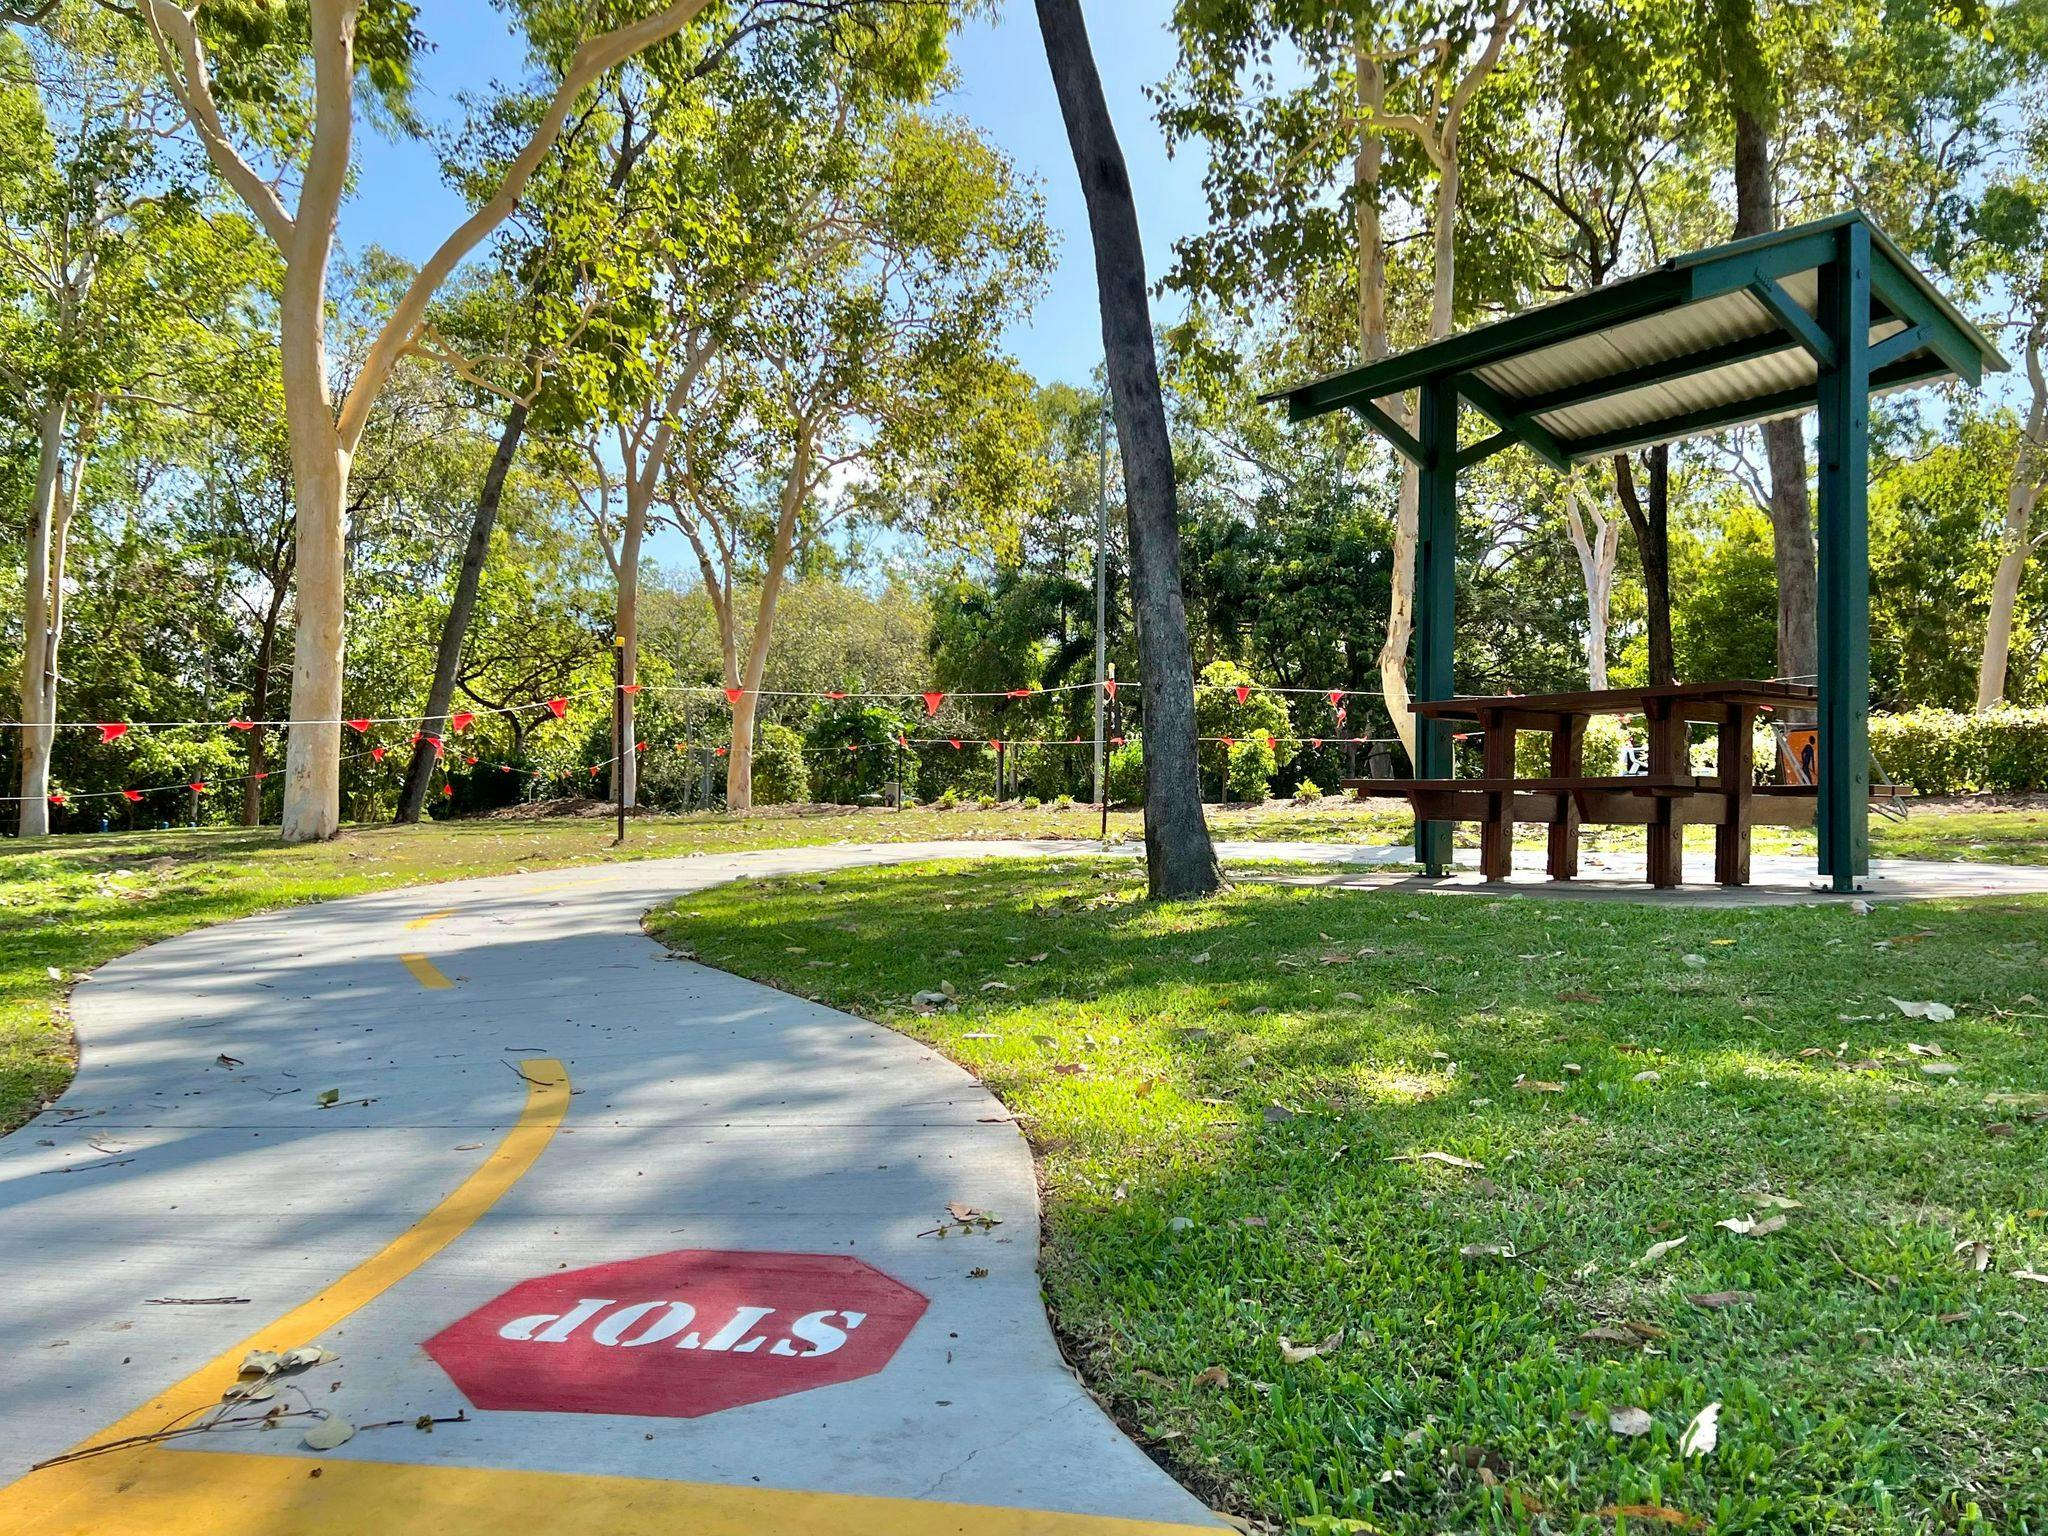  Focus Park Playground Improvements Complete